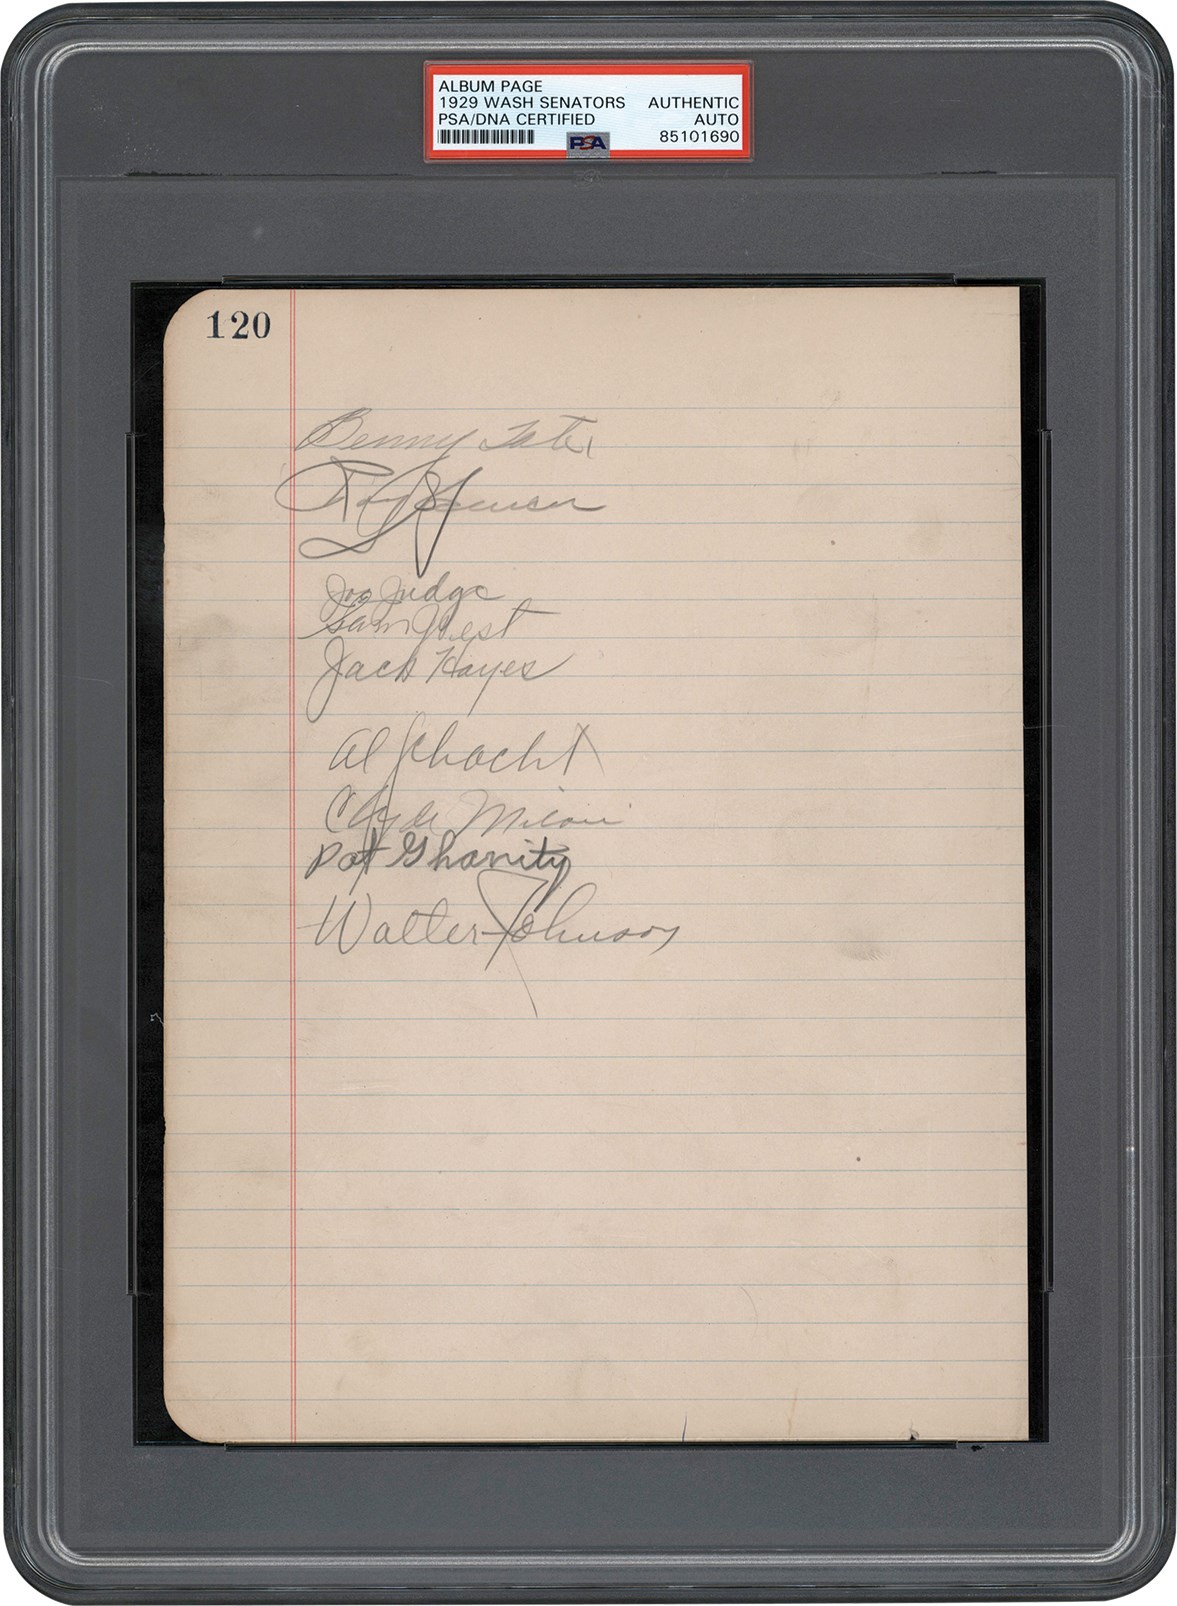 Baseball Autographs - 1929 Washington Senators Multi-Signed Album Page w/Walter Johnson (PSA)